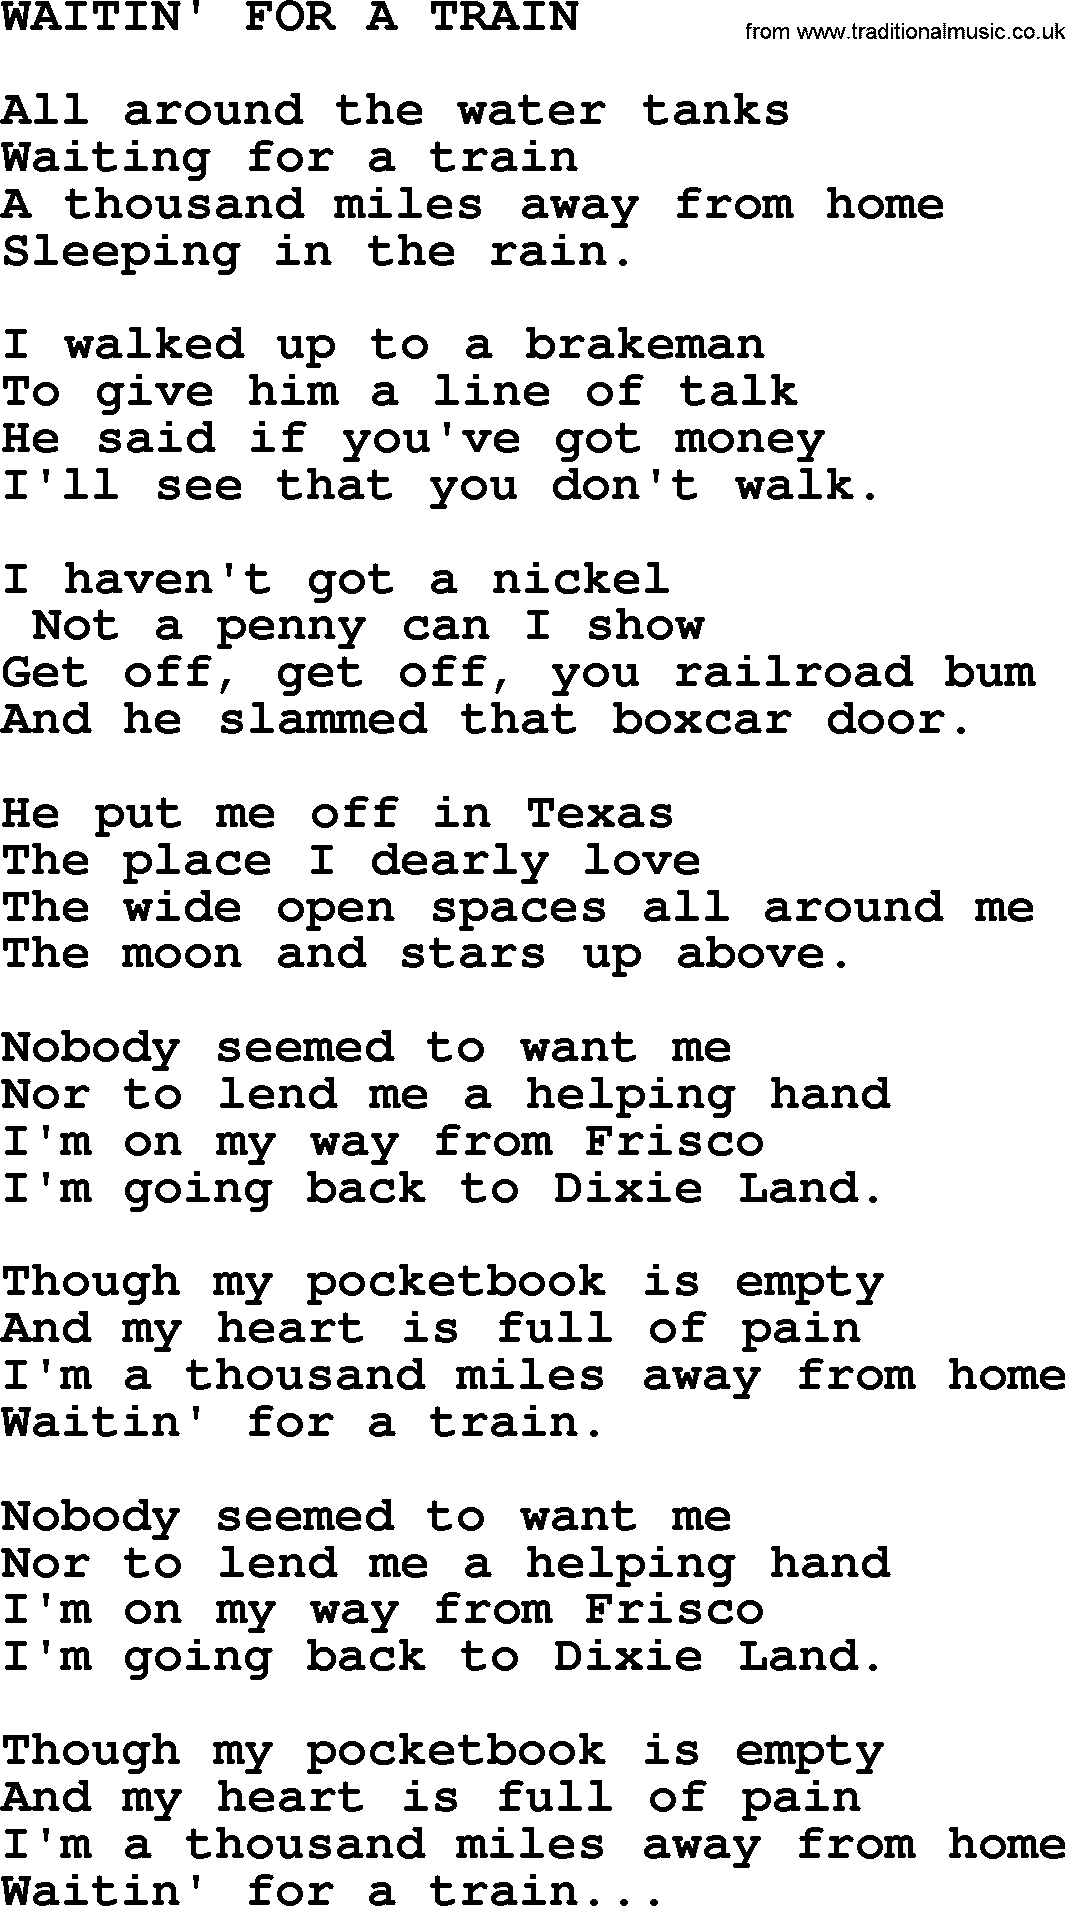 Merle Haggard song: Waitin' For A Train, lyrics.